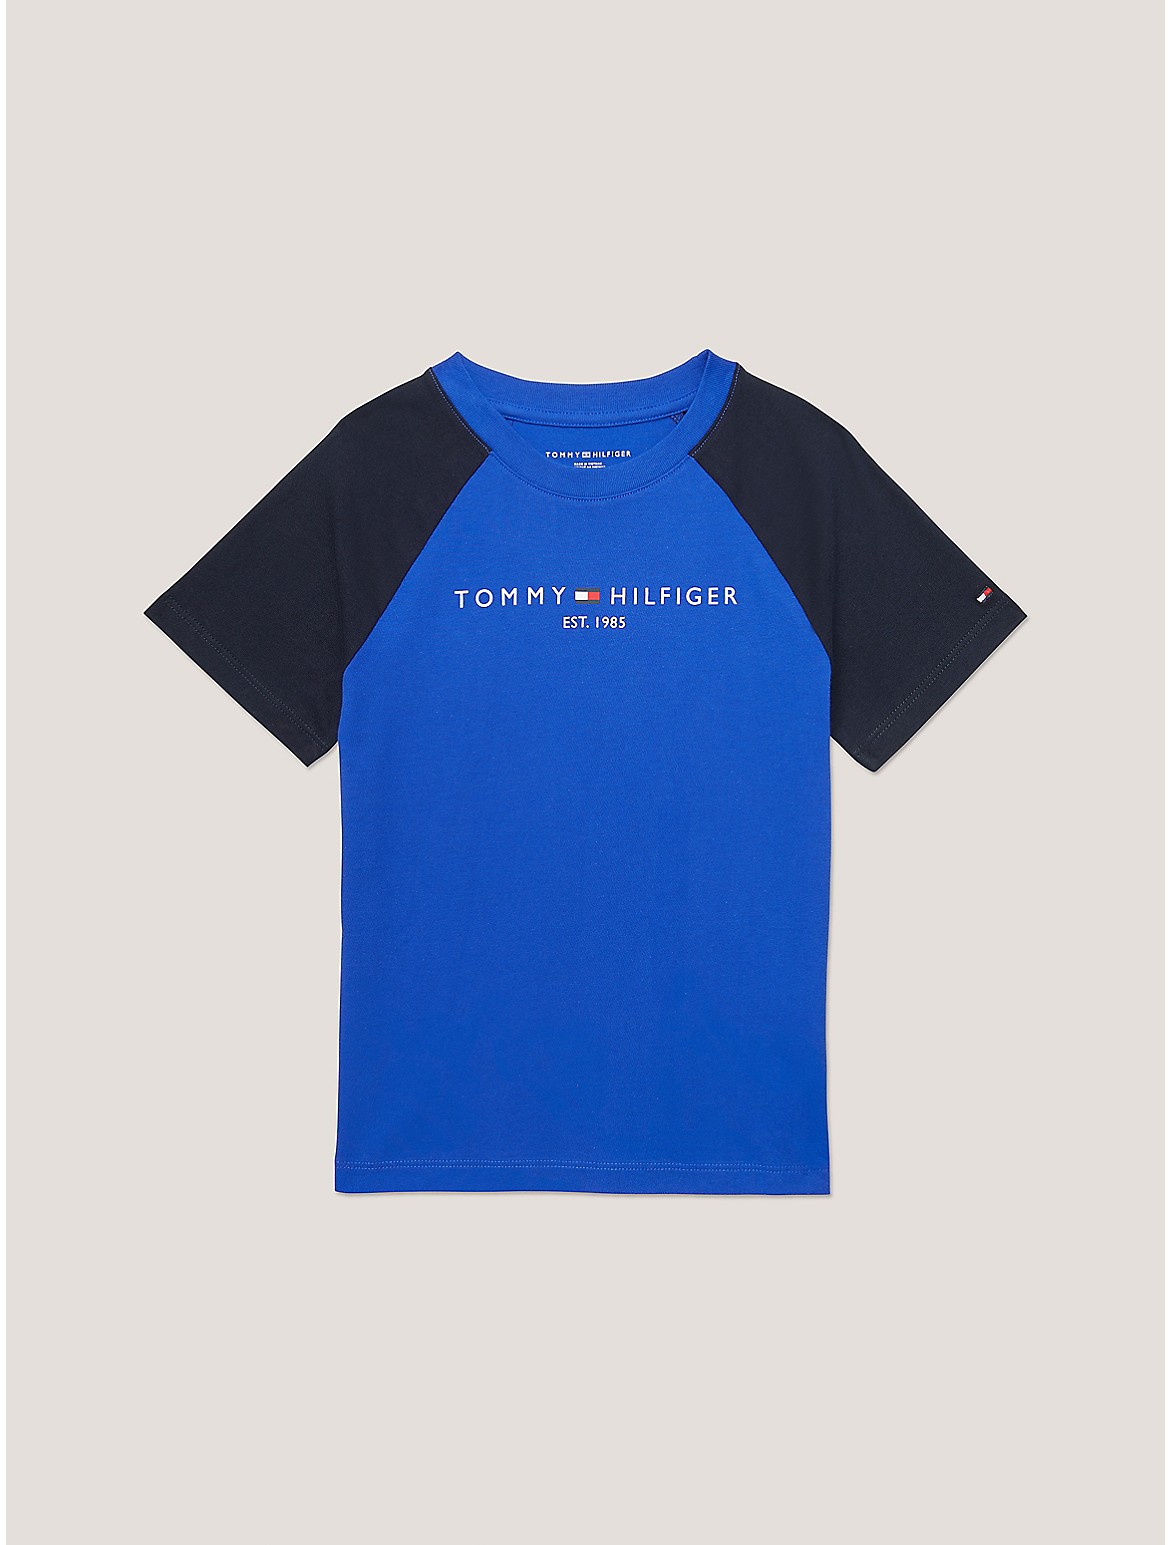 Tommy Hilfiger Boys' Kids' Baseball T-Shirt - Blue - S